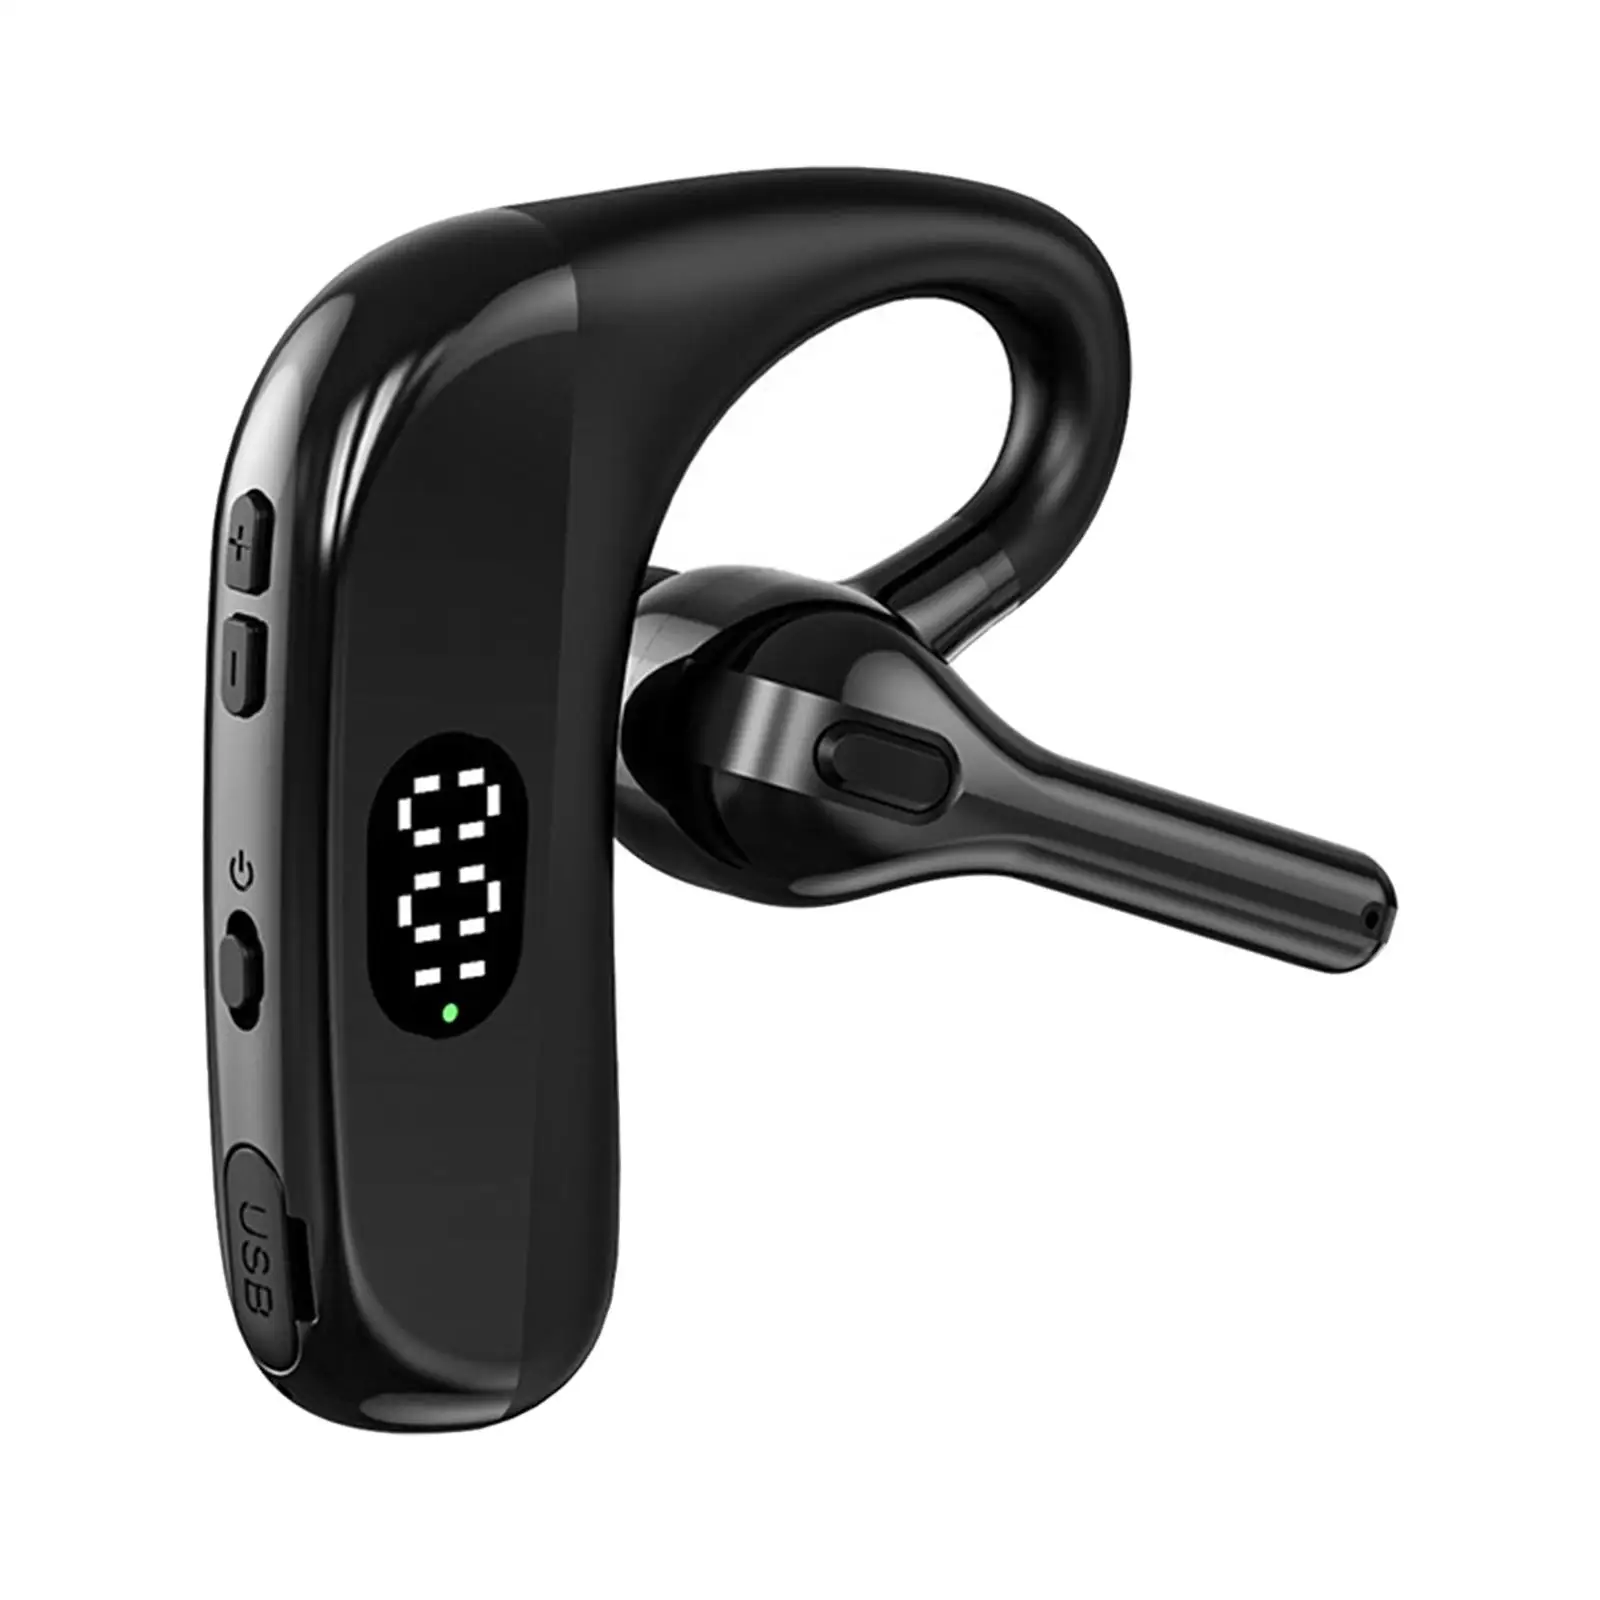 Waterproof Bluetooth Headset Ear Hook Lightweight Built-In HD Microphone Hands Free Earbud Earphones for Smartphones Driving